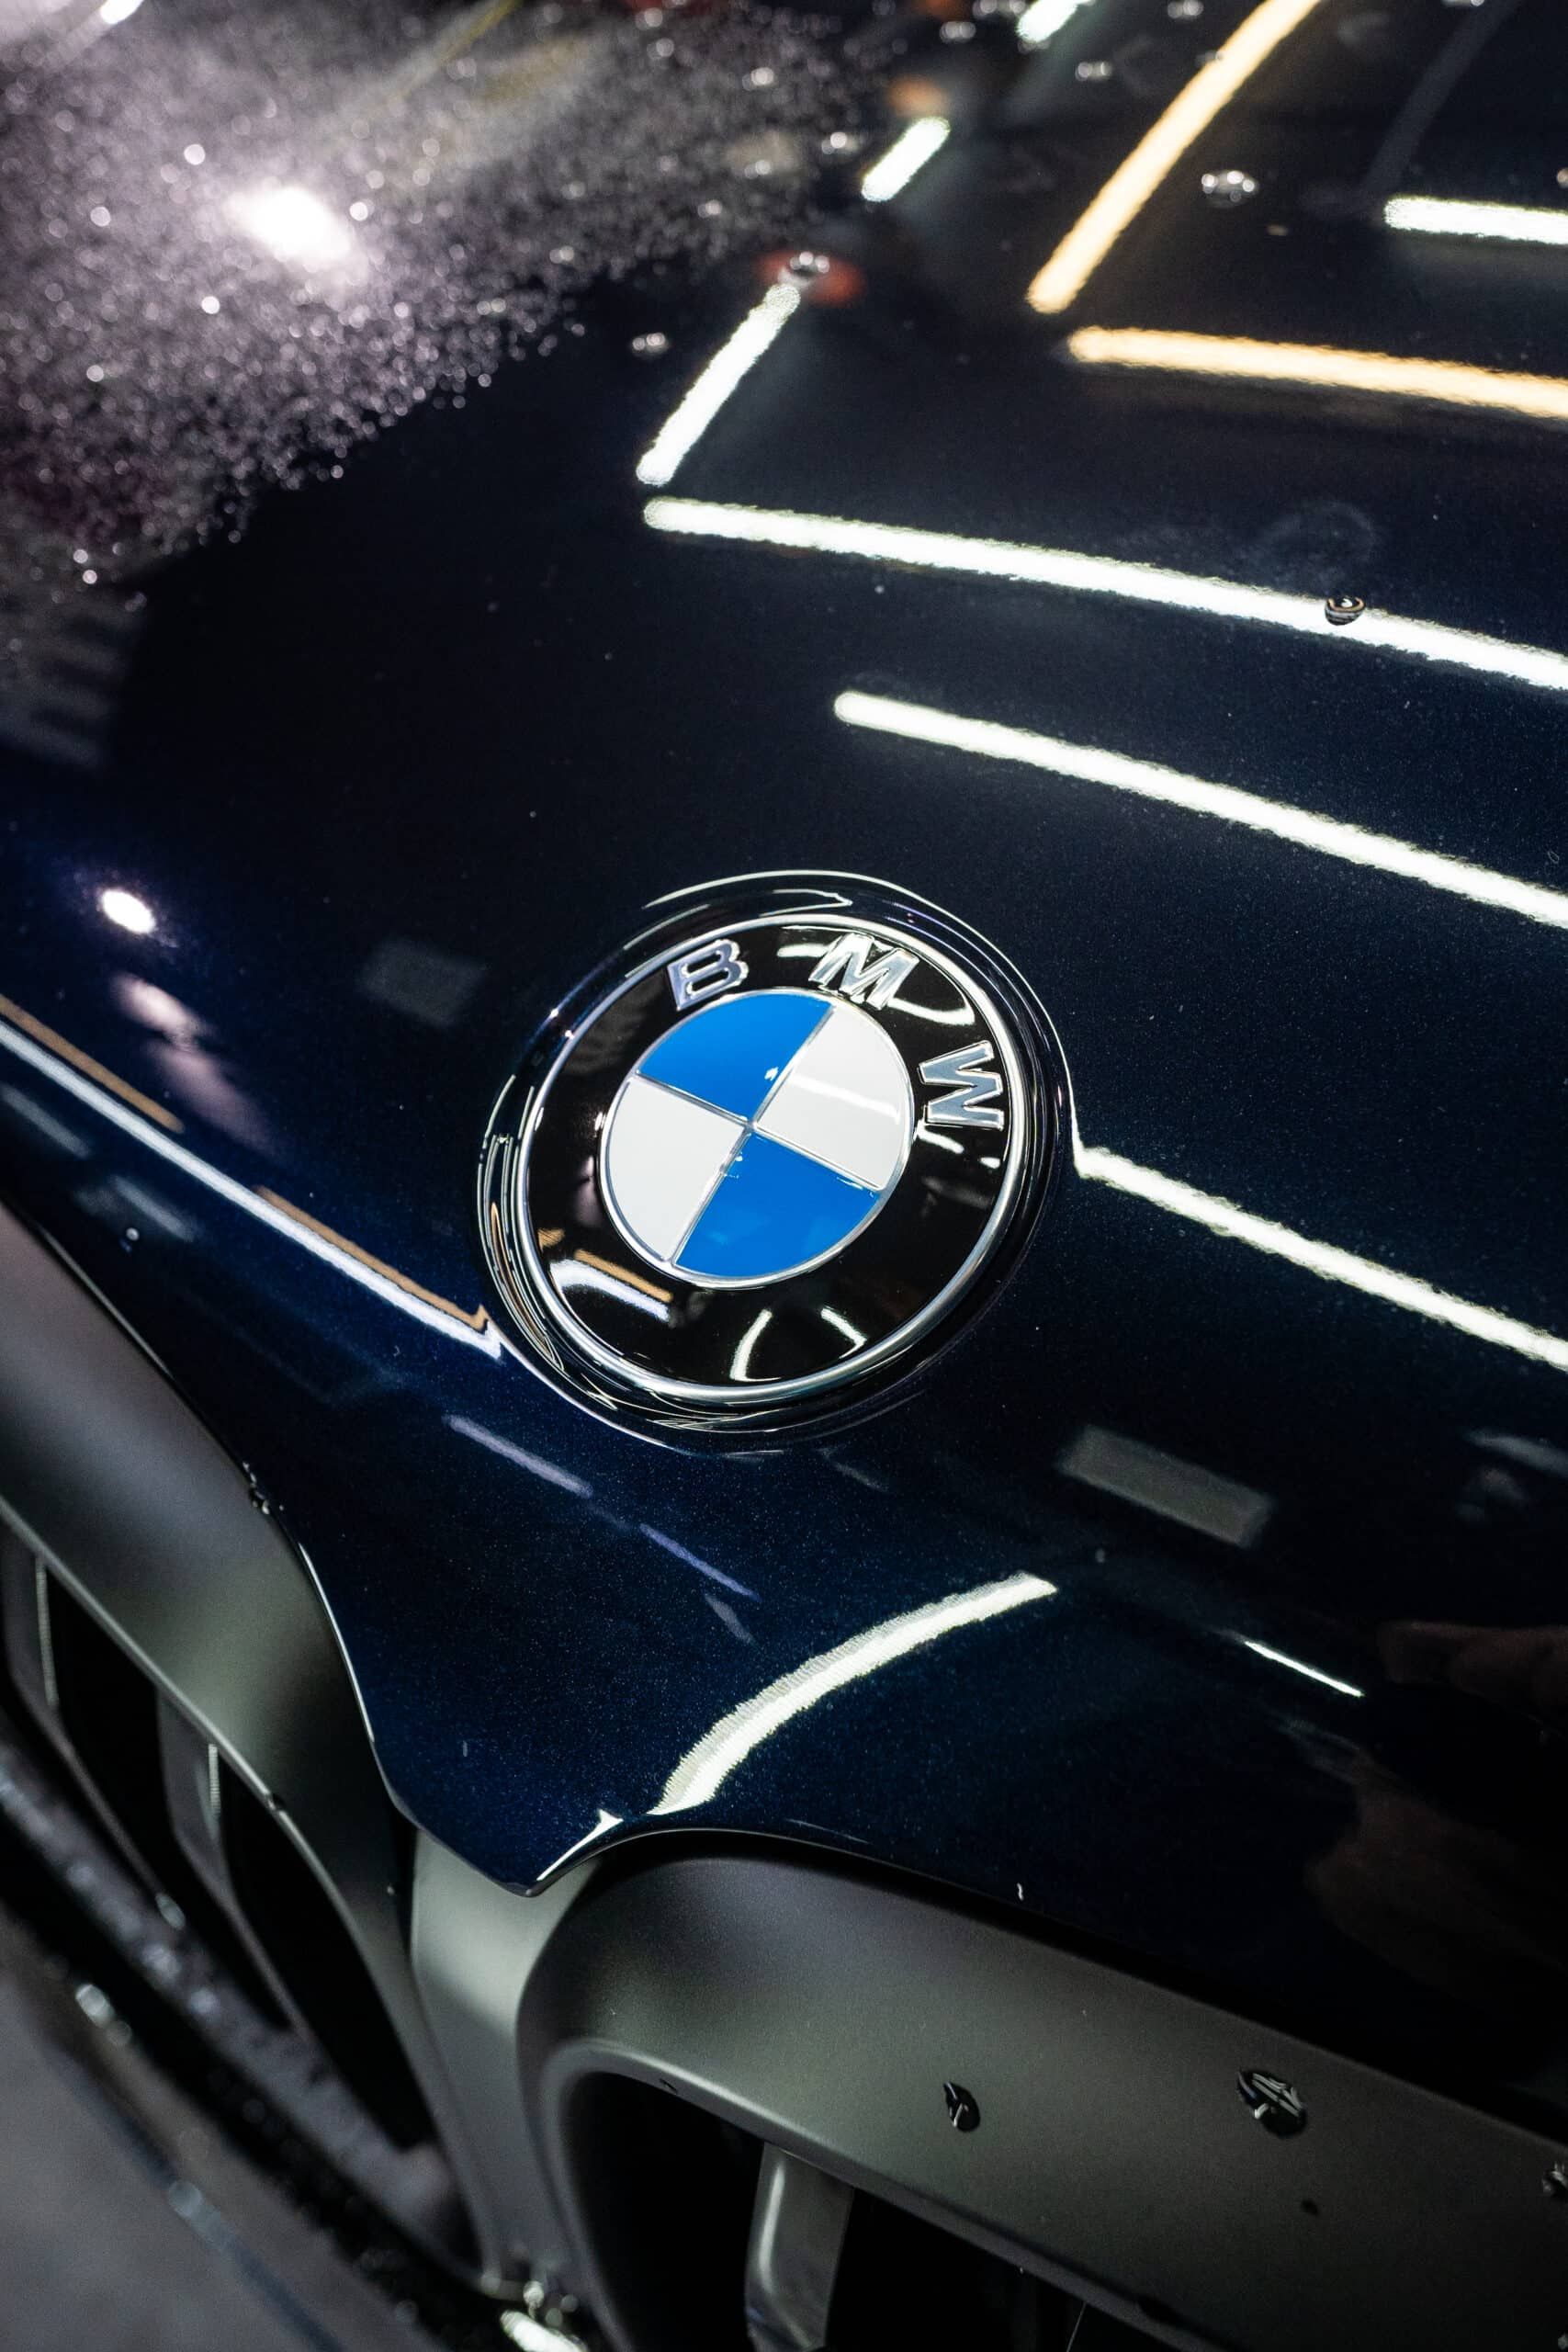 A close up of a bmw emblem on the hood of a car.